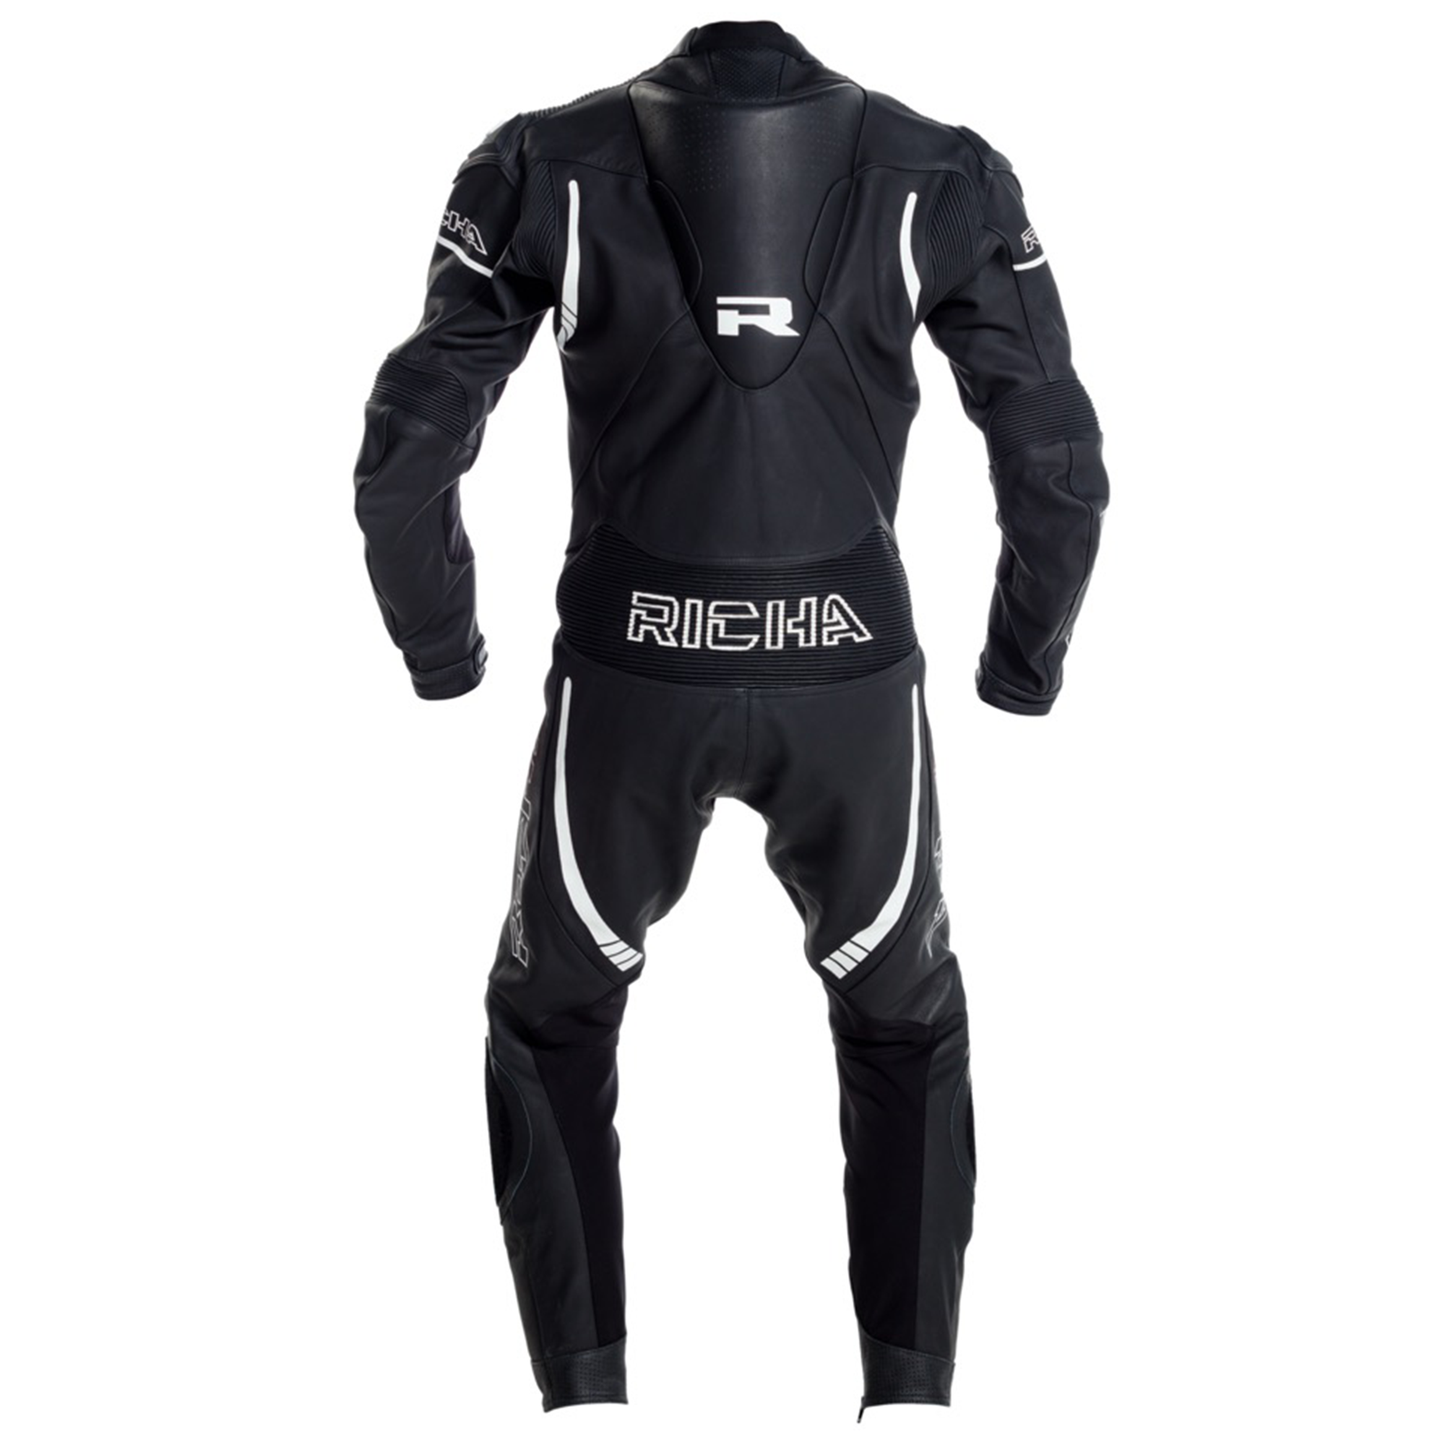 Richa Baracuda 1.1 Leather Suit - Black